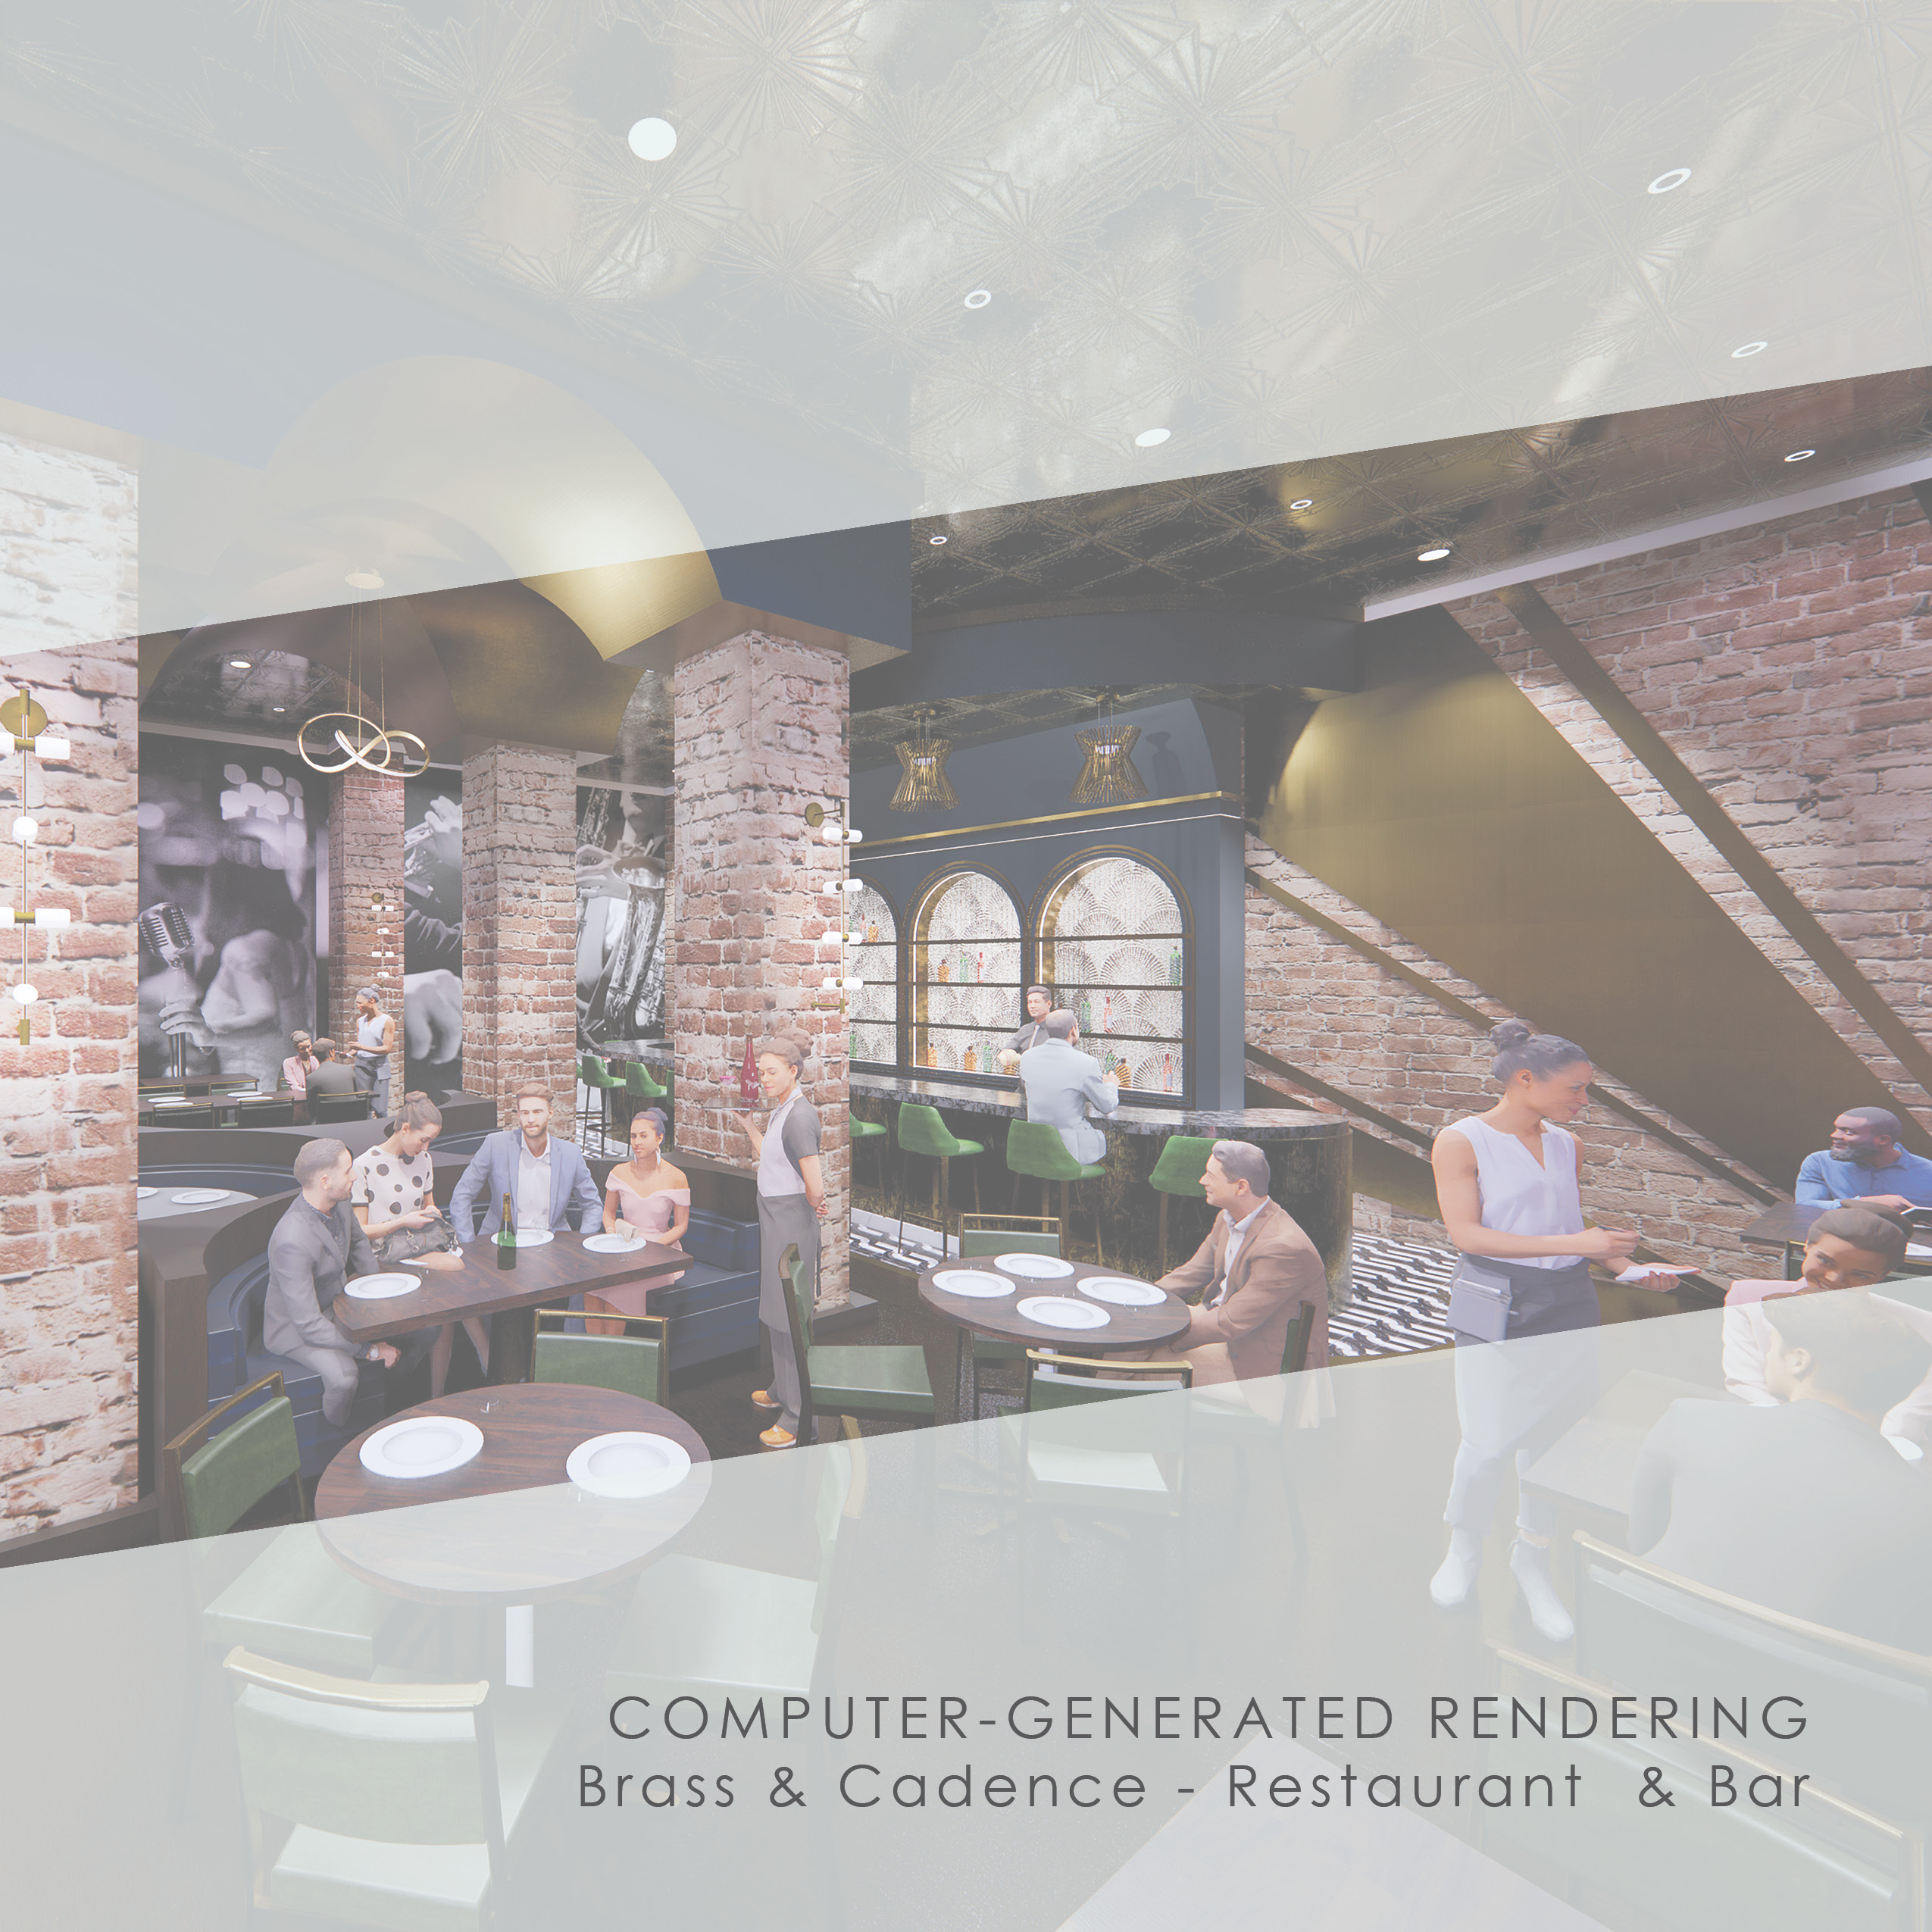 Computer-Generated Rendering: Brass & Cadence - Restaurant & Bar